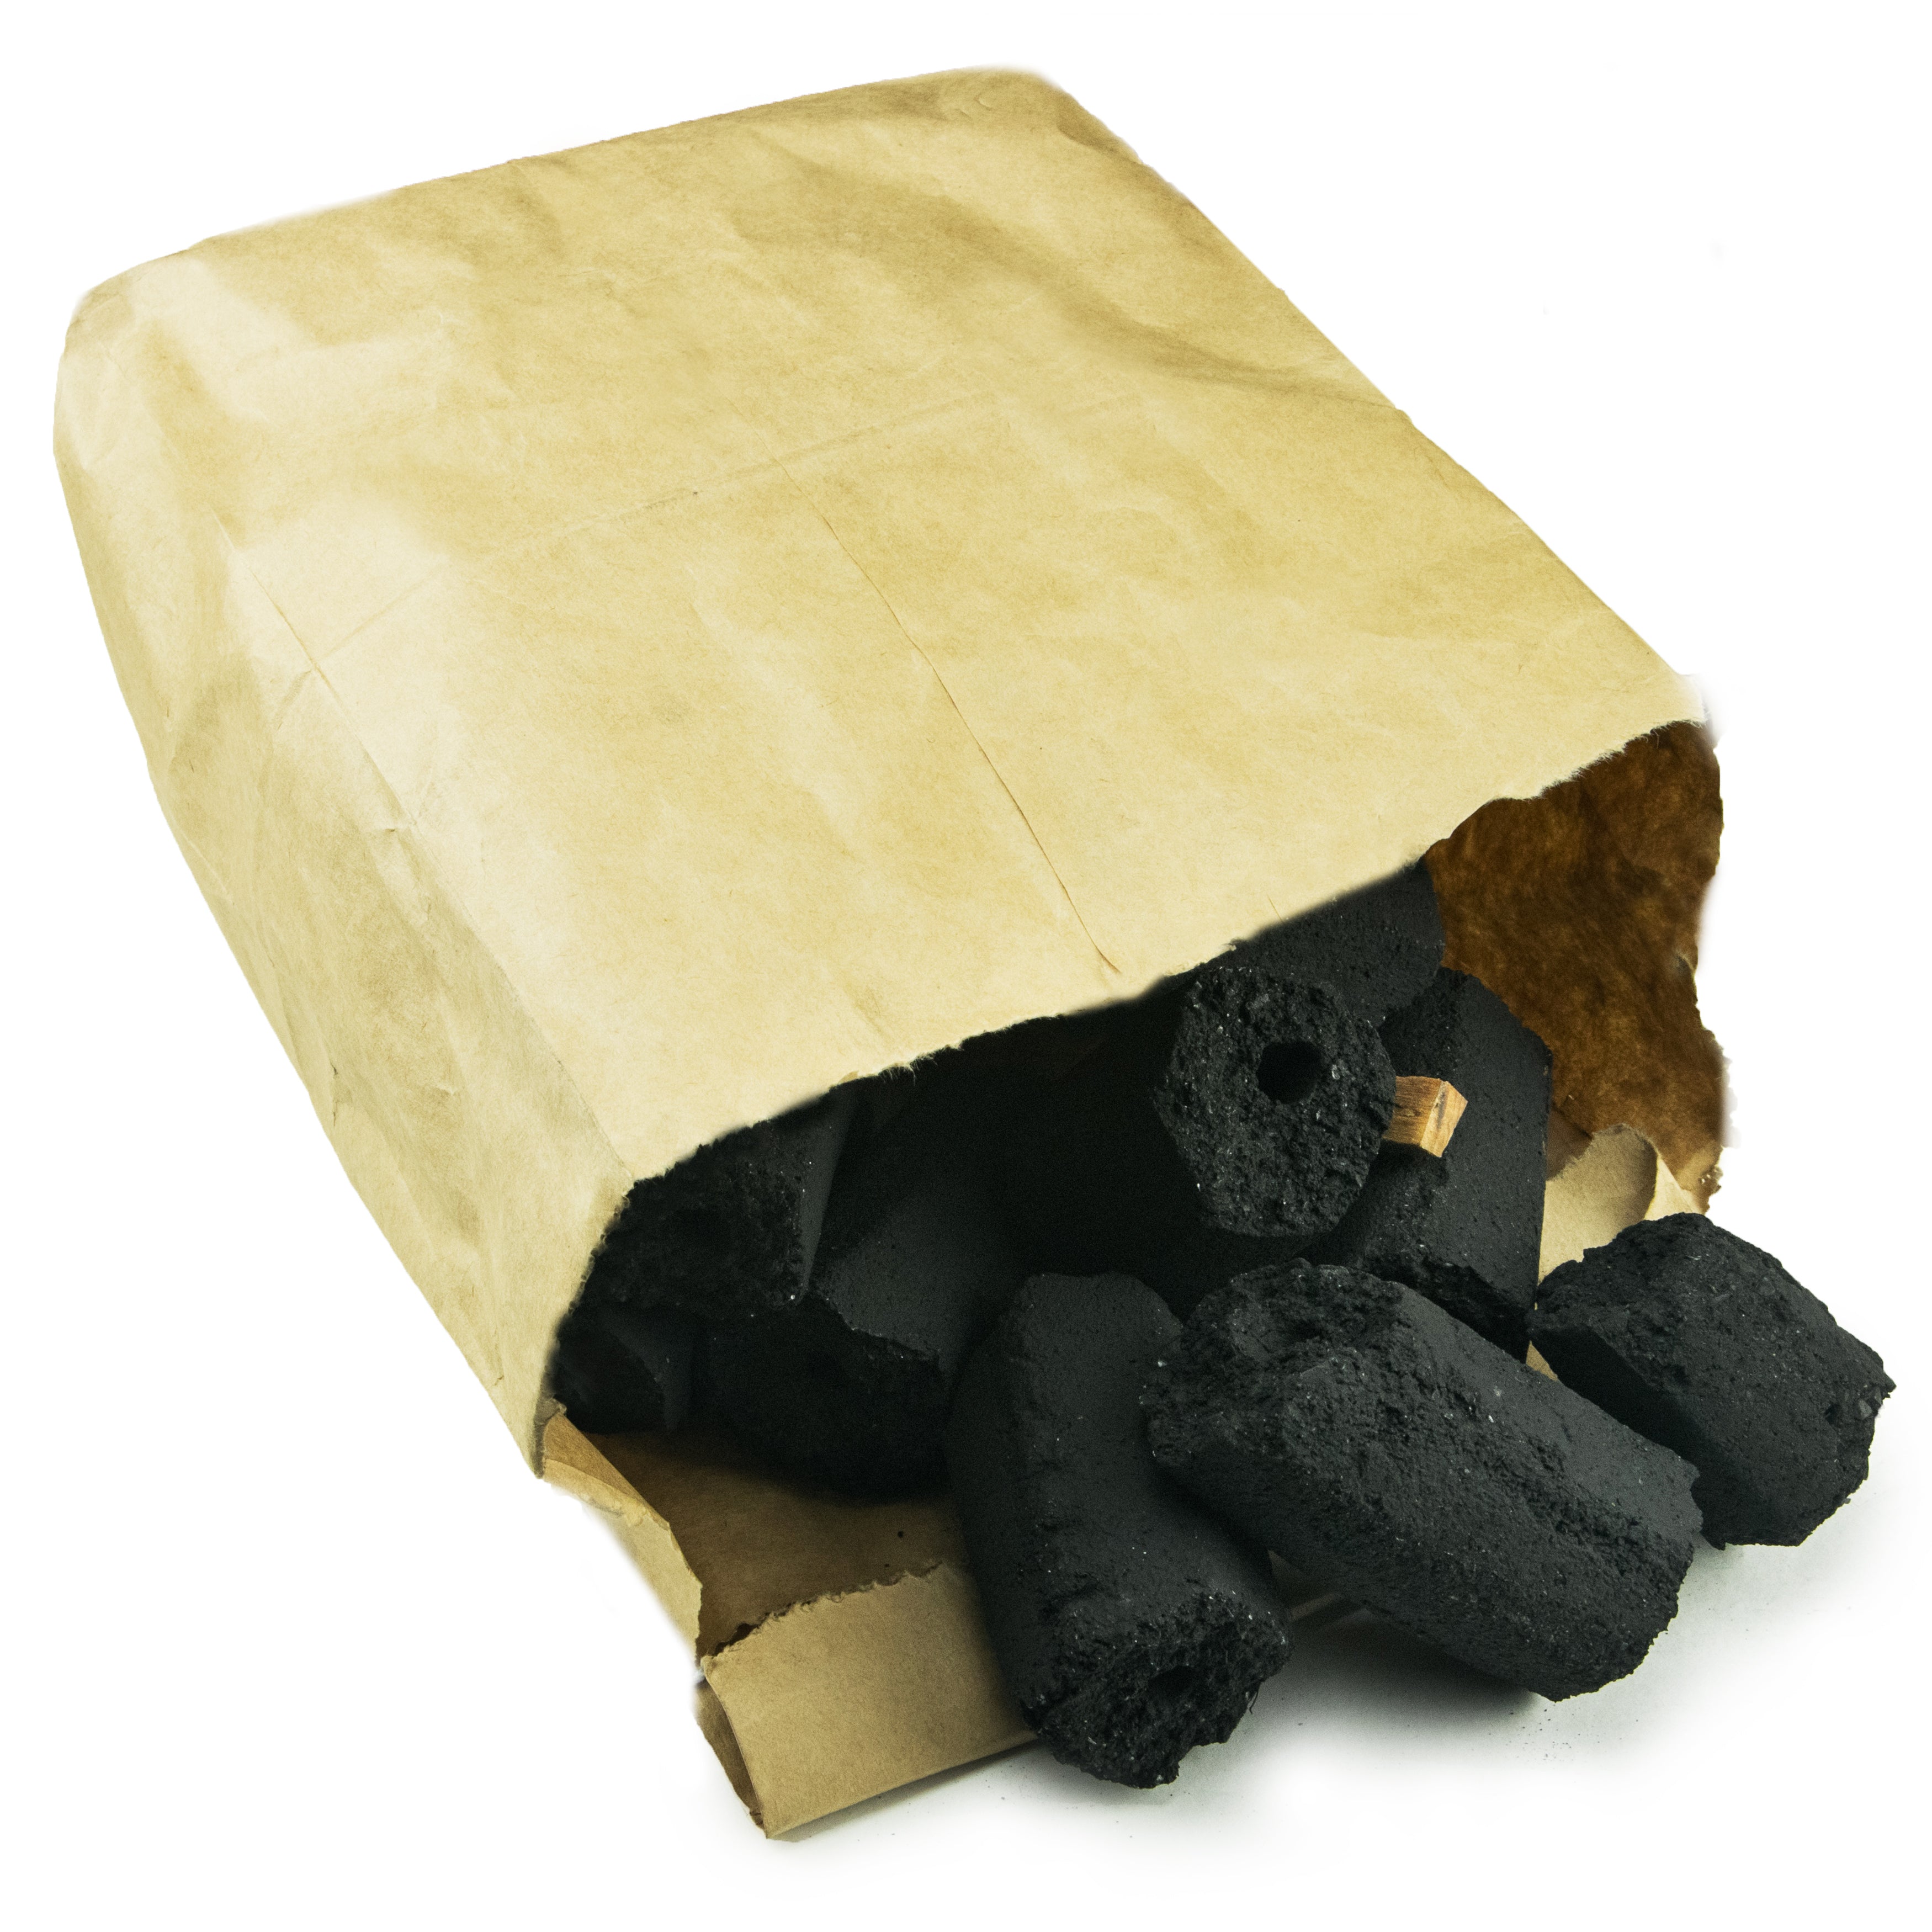 Premium Coconut Shell Charcoal Logs - 9lb Box